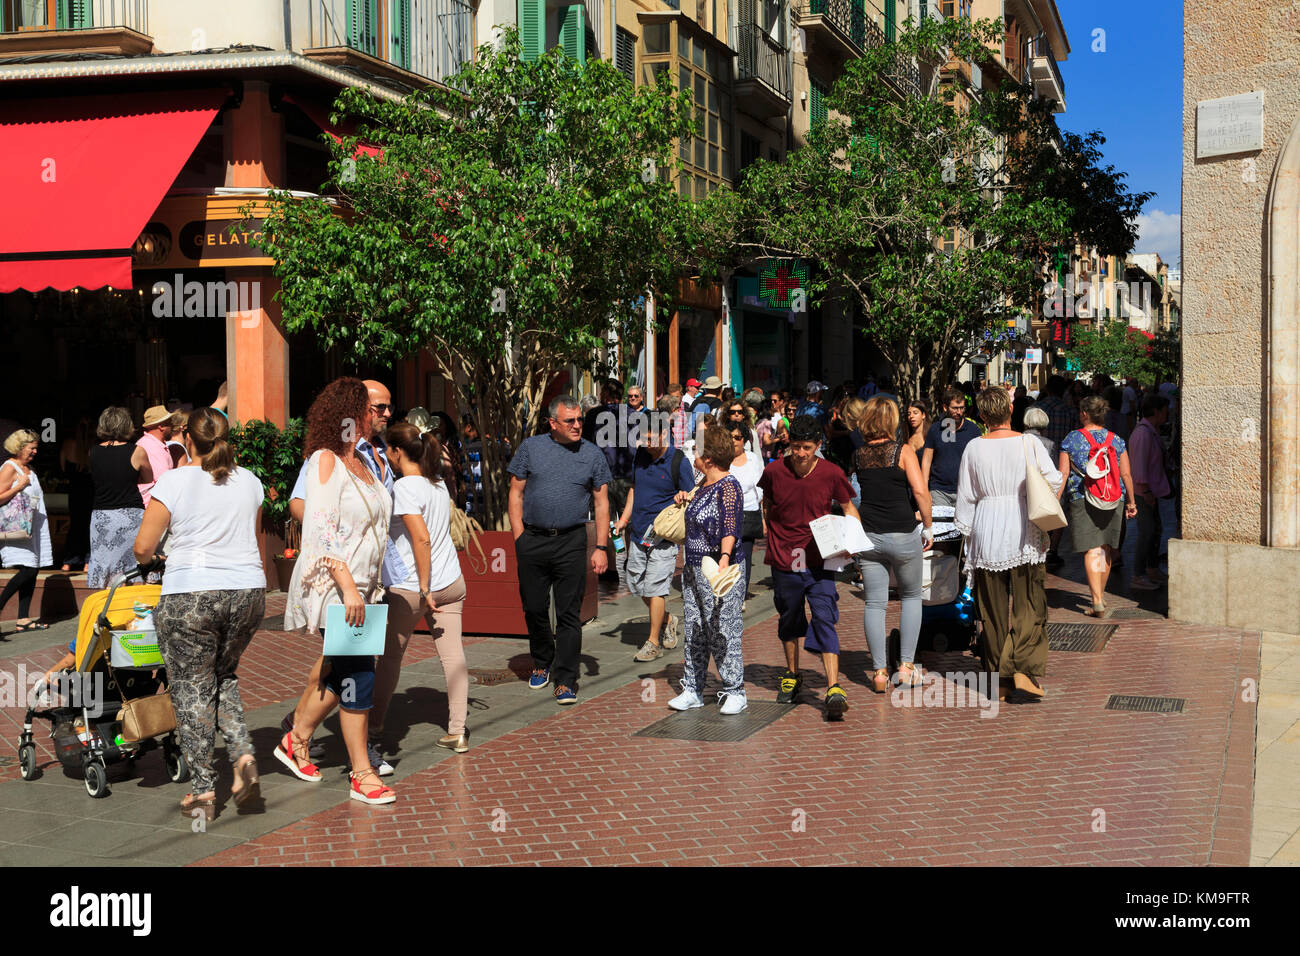 Saint Miguel Street, Palma De Mallorca, Majorca, Belearic Islands, Spain, Europe Stock Photo